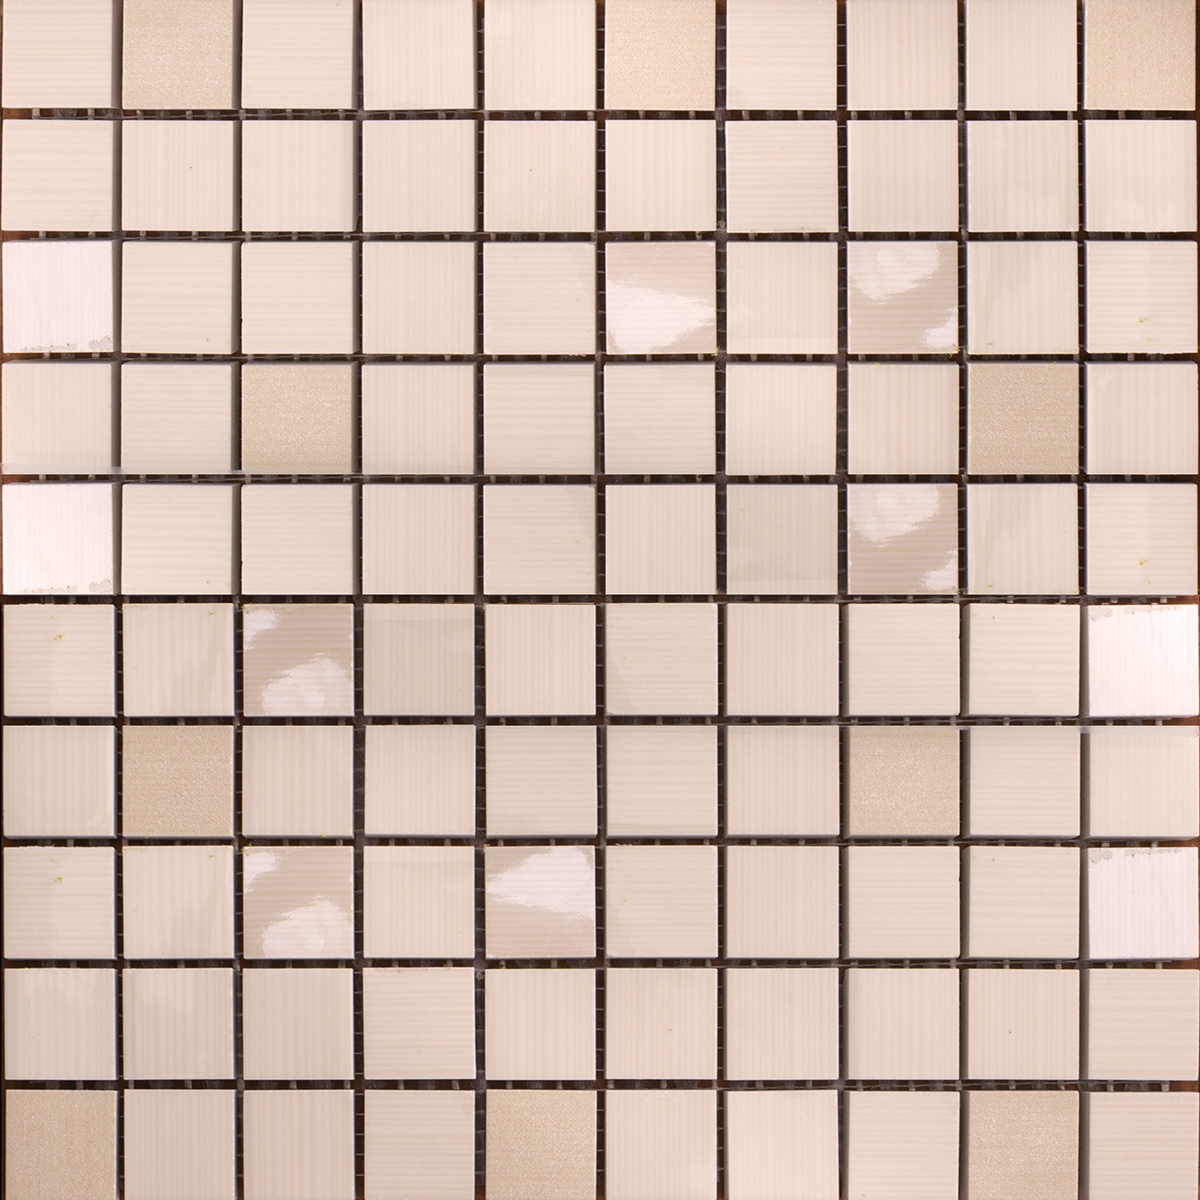 Мозаика Essere Allegria Mosaico Beige, Италия, квадрат, 250x250, фото в высоком разрешении